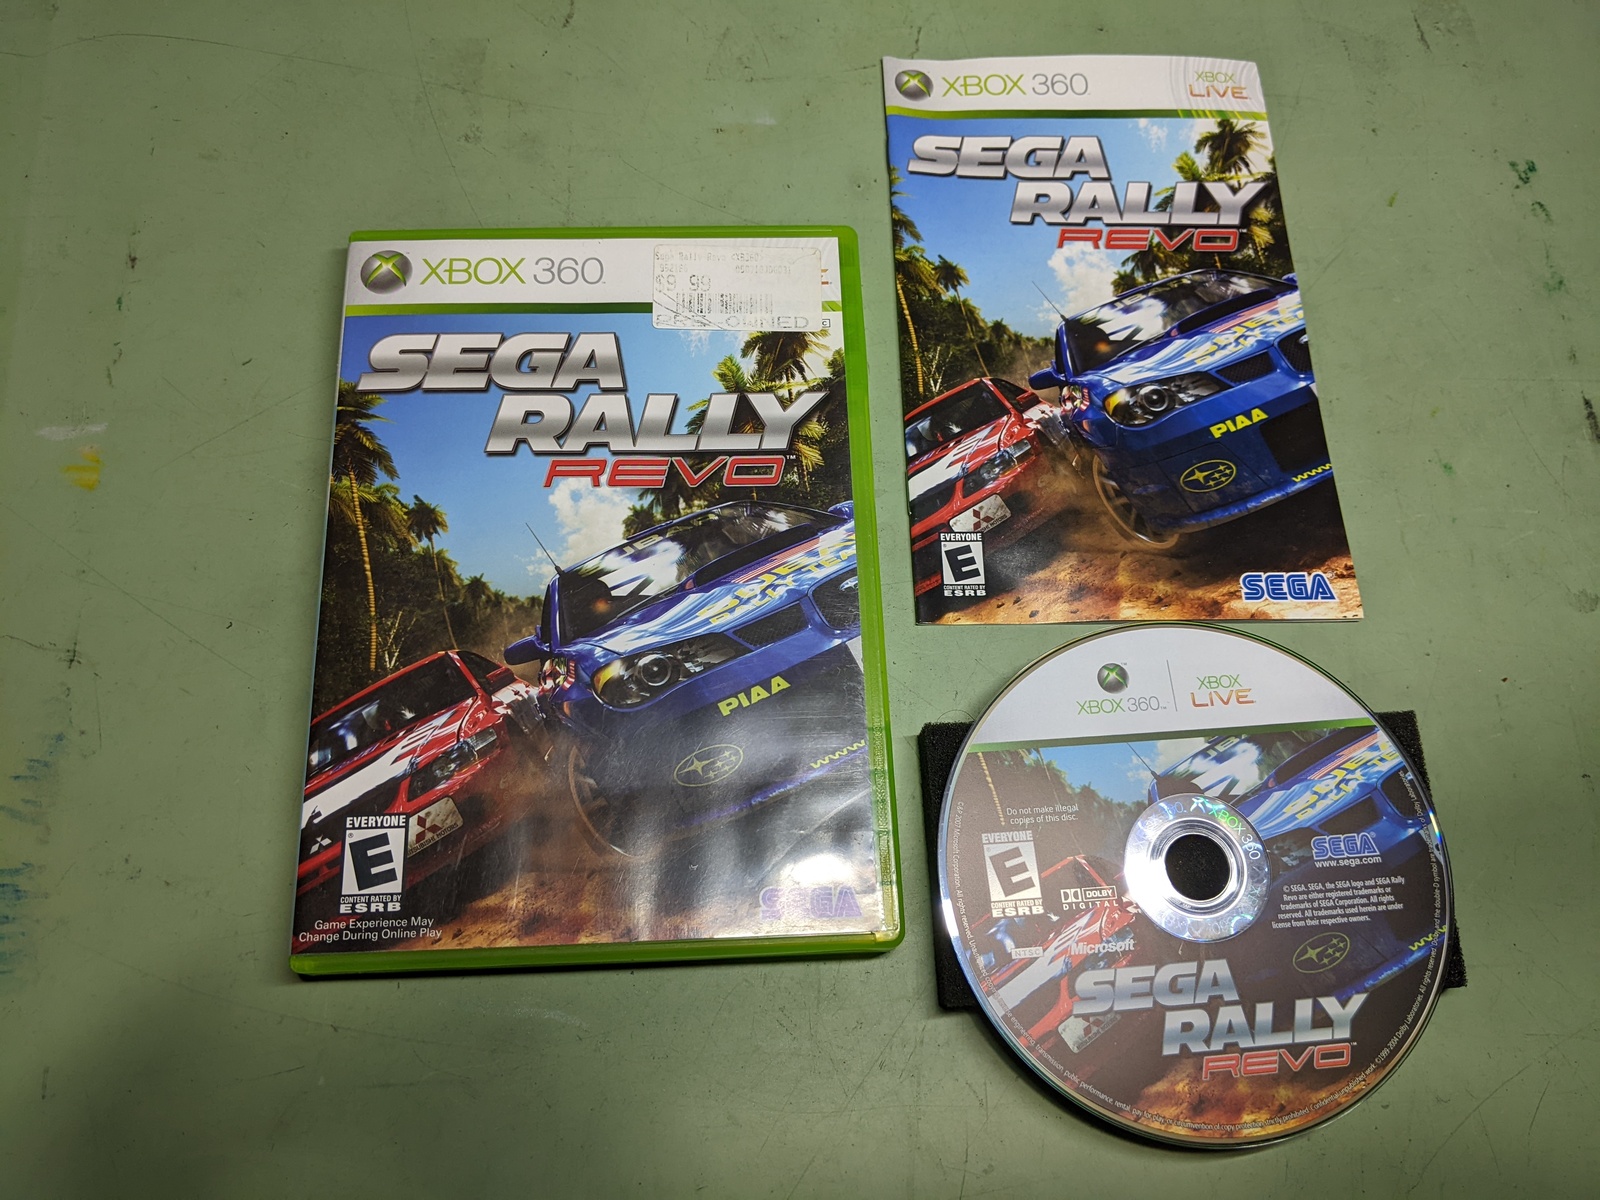 Sega Rally Revo Microsoft XBox360 Complete in Box - $14.95